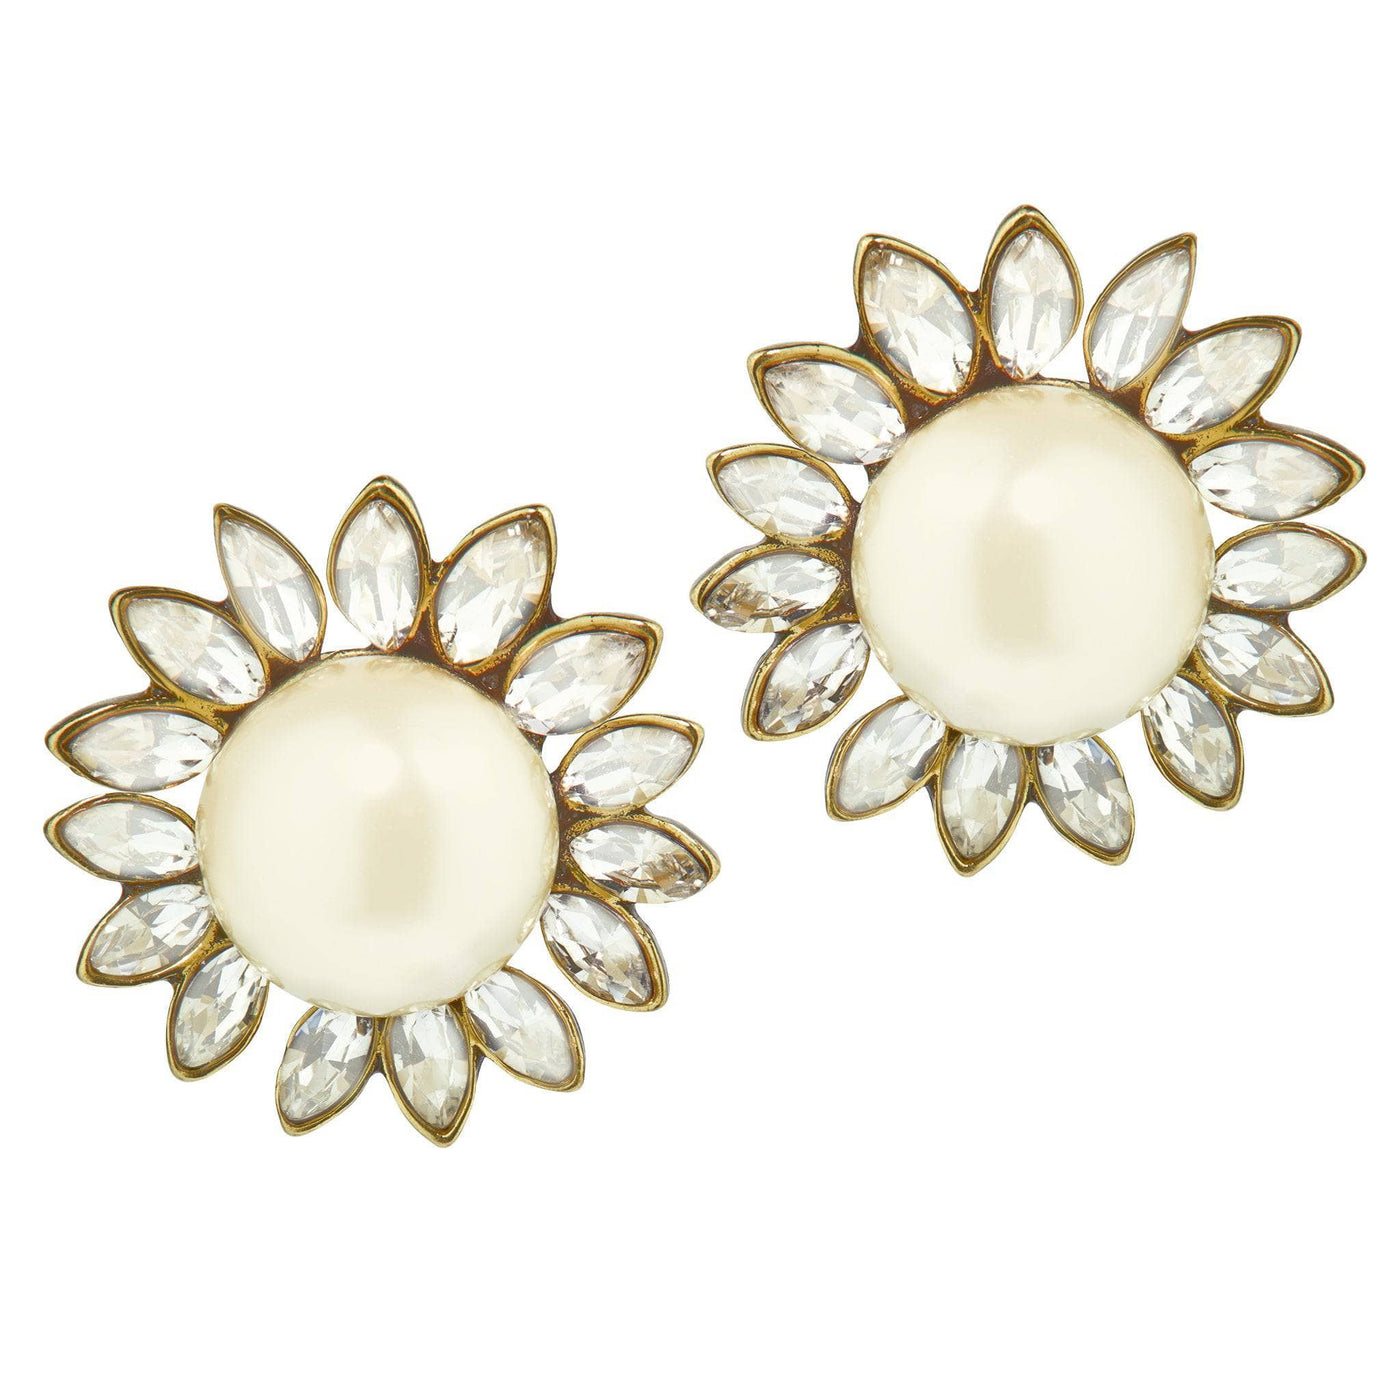 HEIDI DAUS®"Ladies Who Lunch" Beaded Crystal Necklace & Earring Set